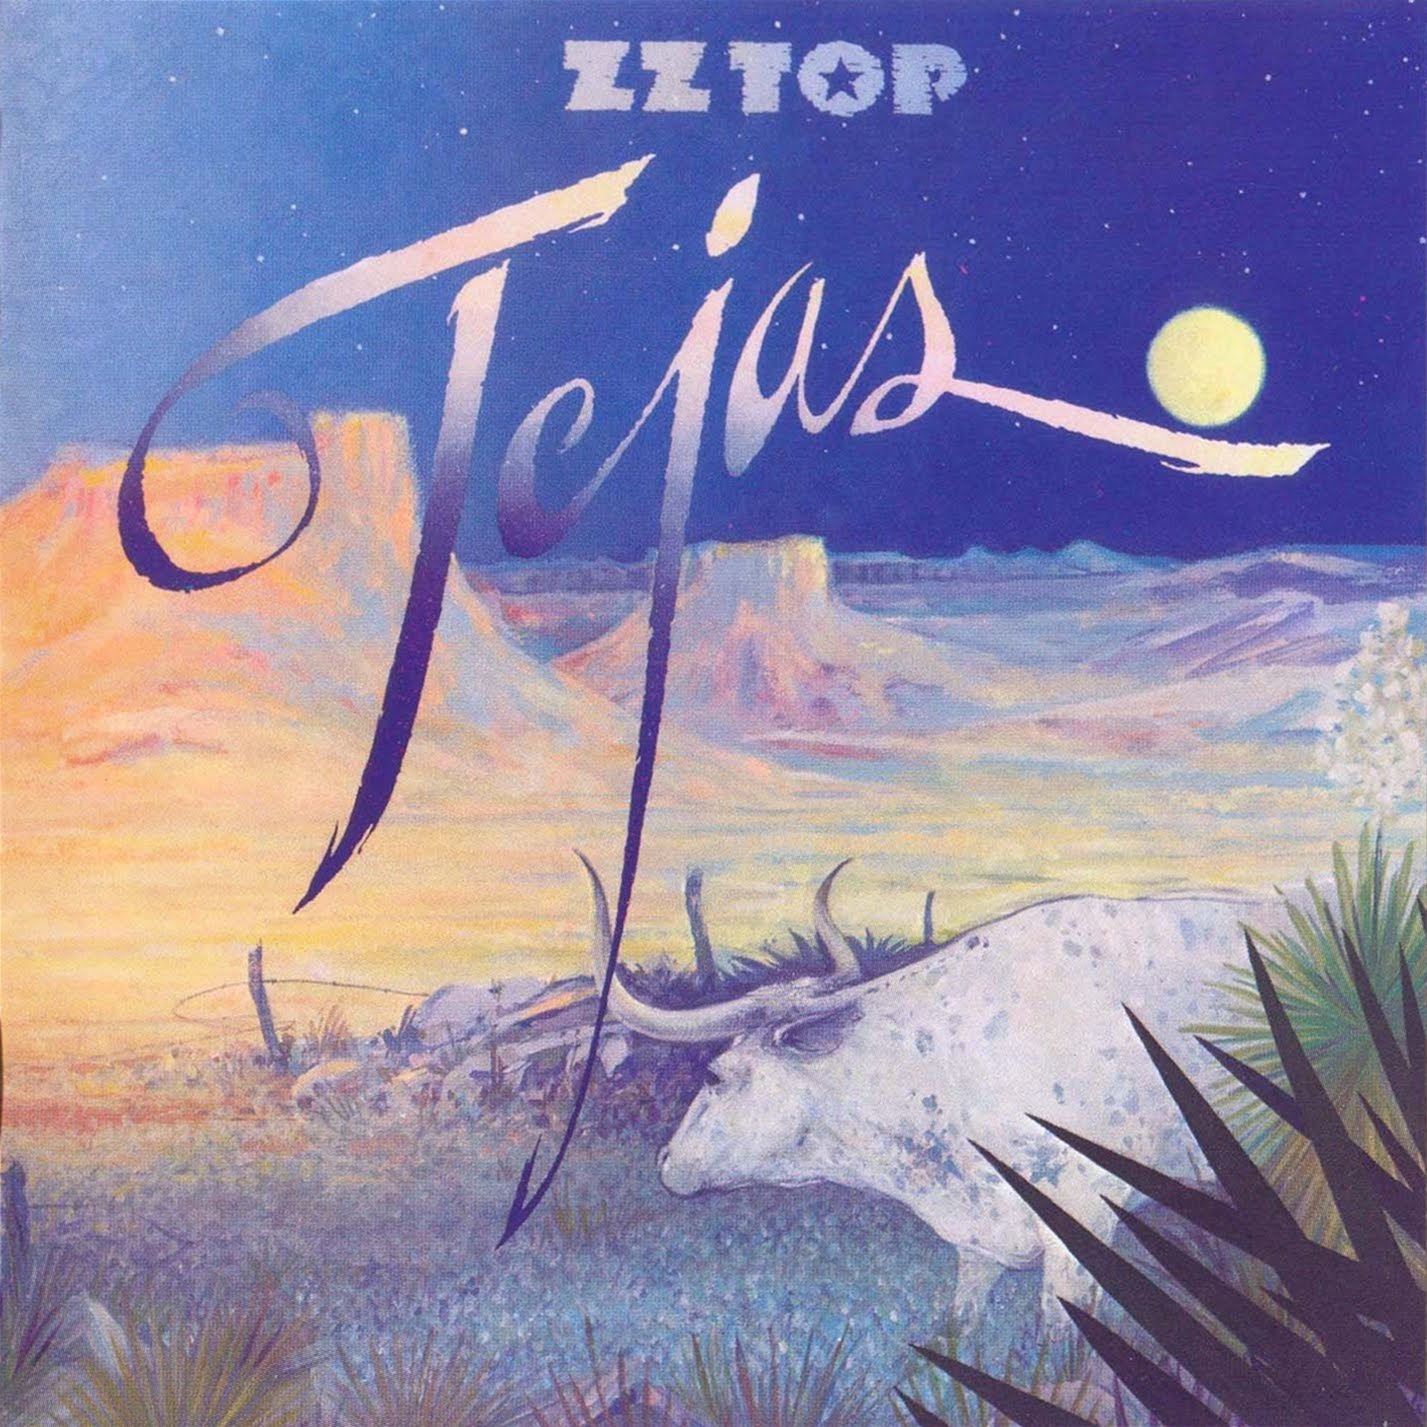 Tejas Lp Cover - Zz Top Tejas Album , HD Wallpaper & Backgrounds